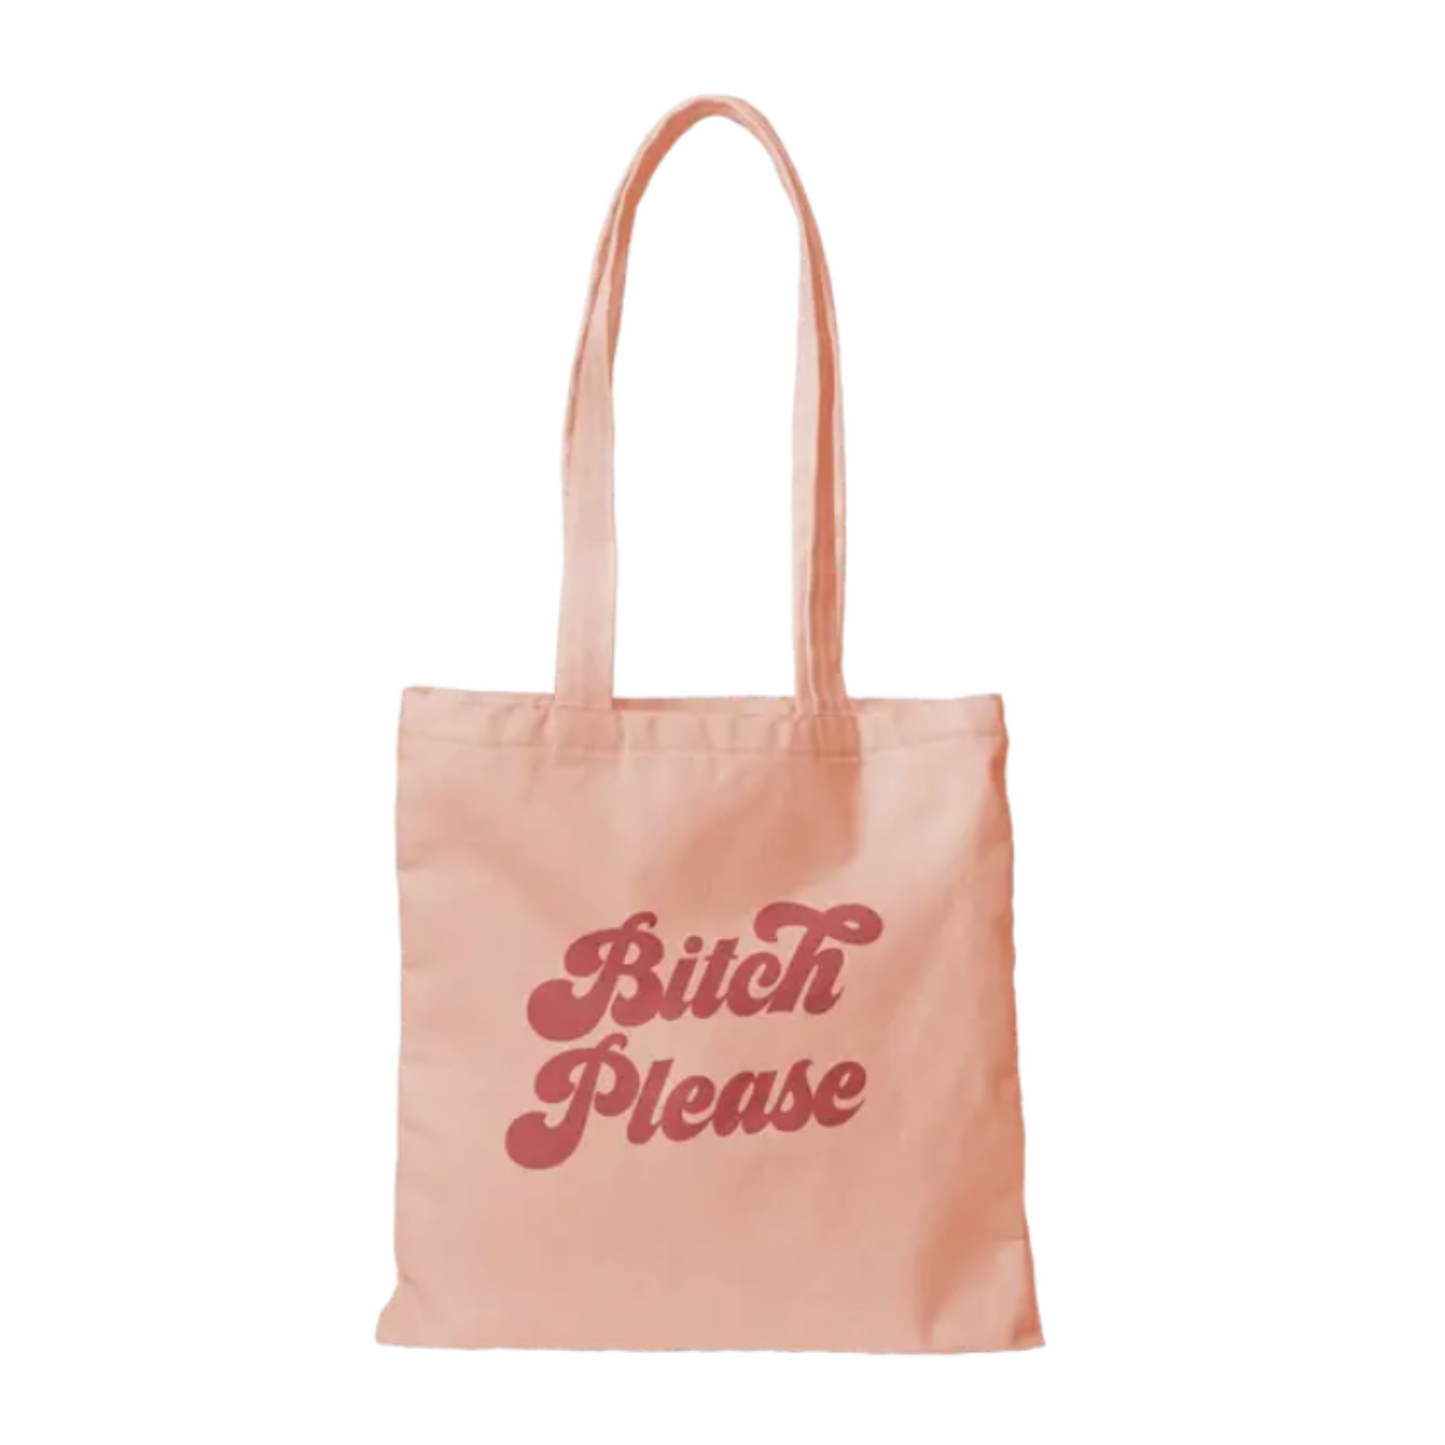 Bitch Please Tote Bag